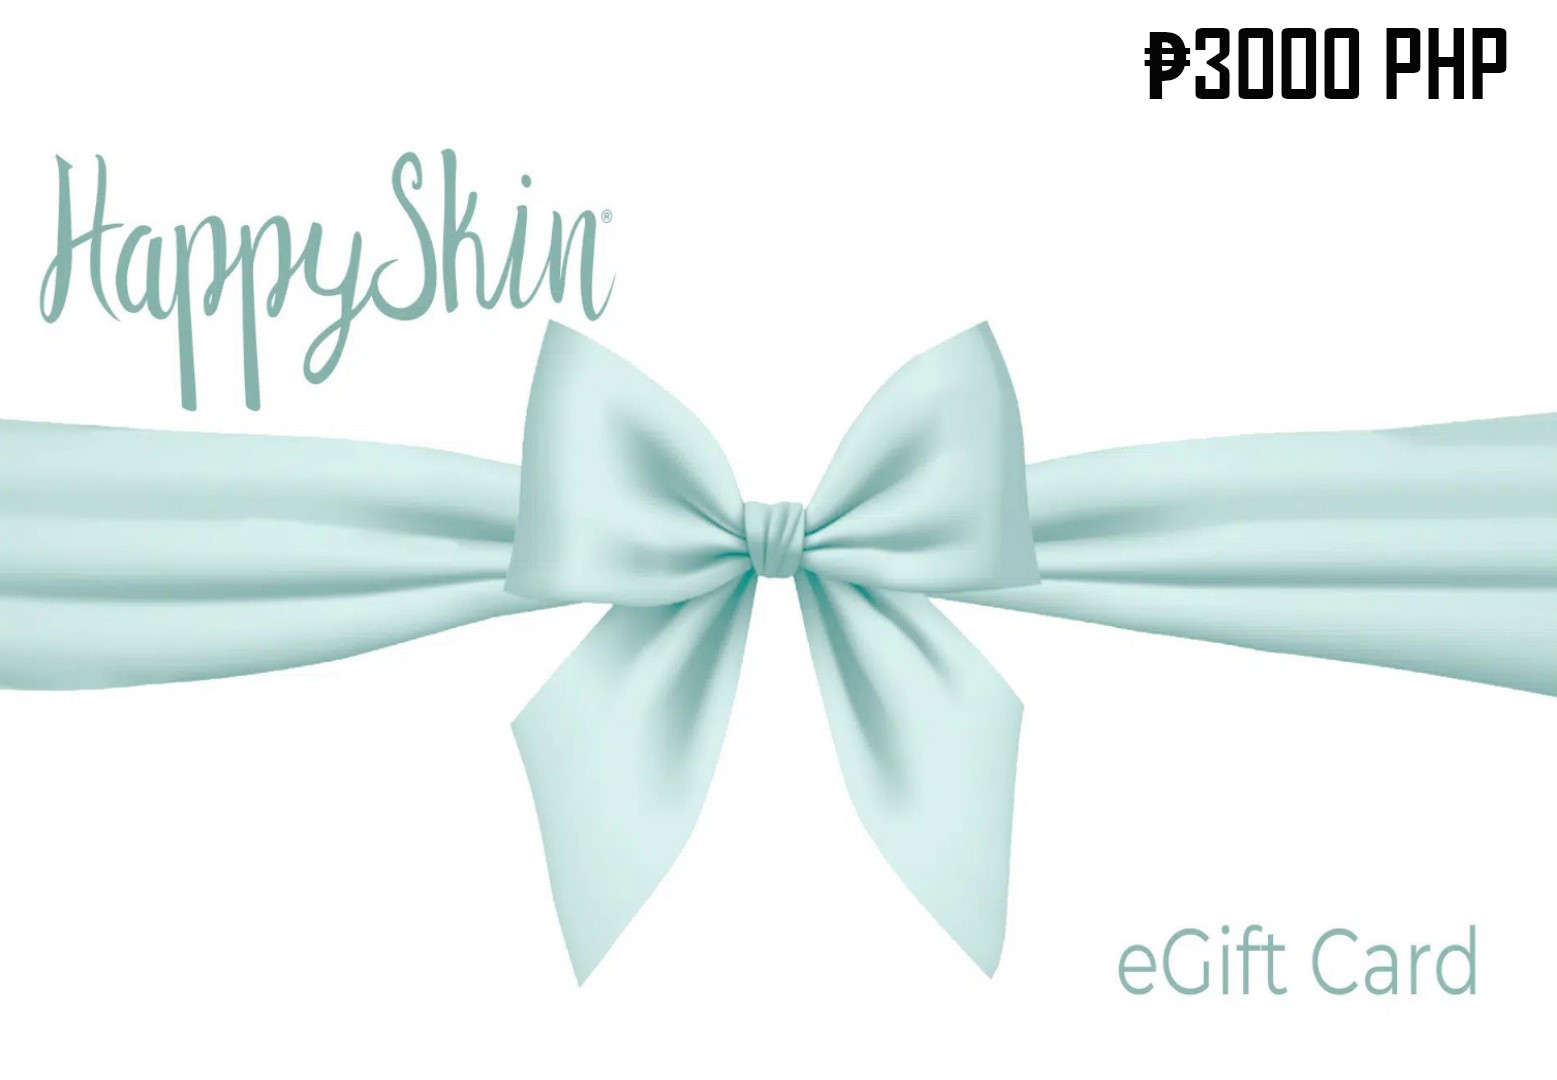 Happy Skin ₱3000 PH Gift Card 62.52 usd